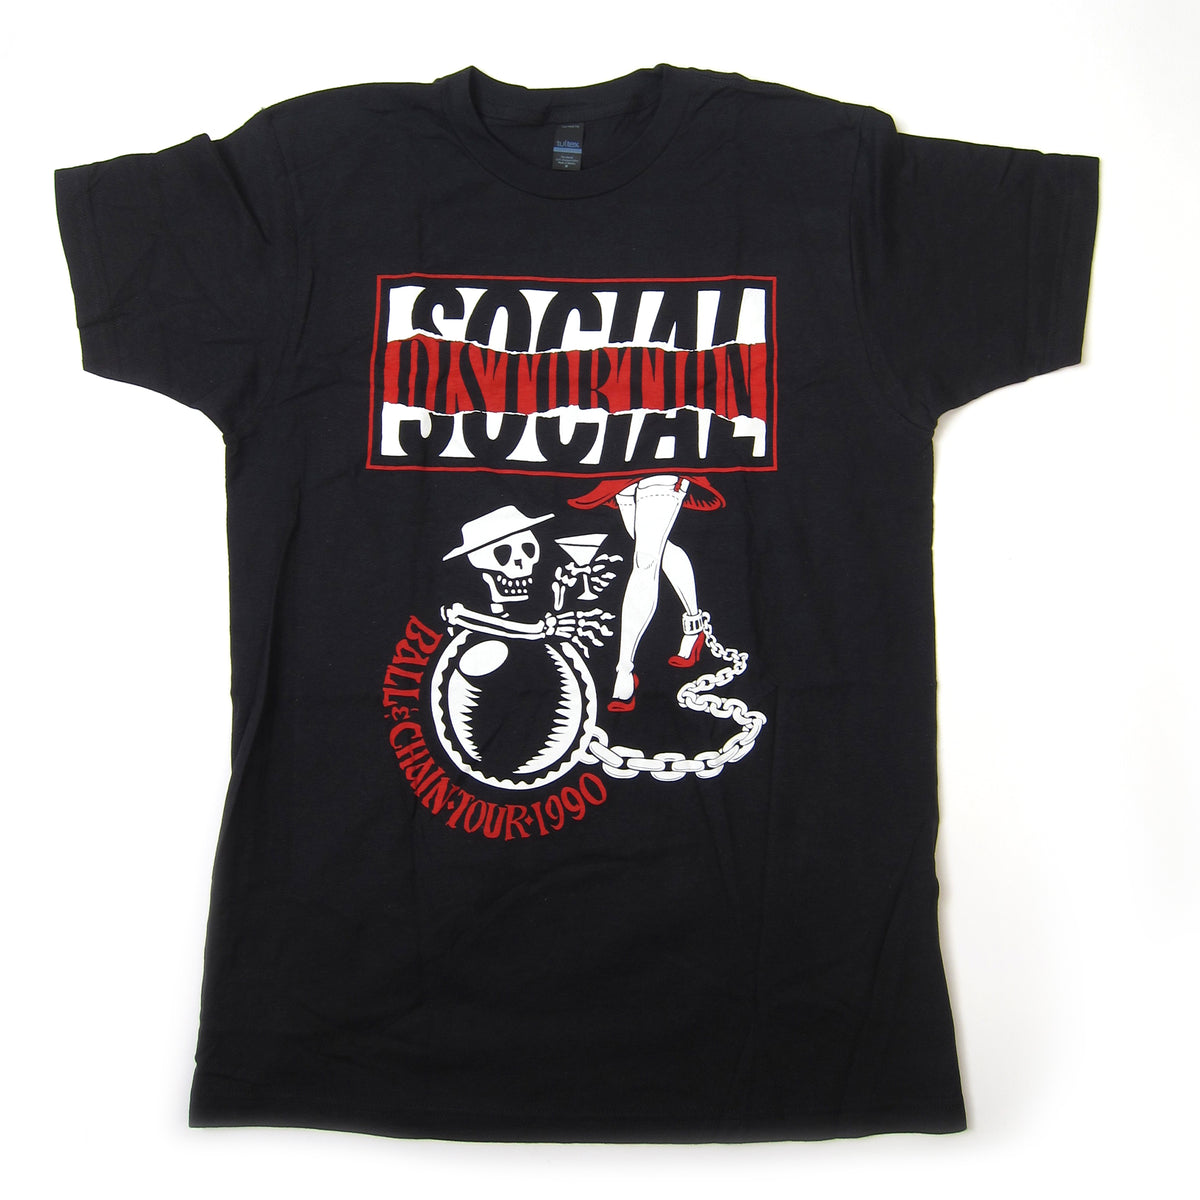 Social Distortion: Ball & Chain Tour Shirt - Coal — TurntableLab.com